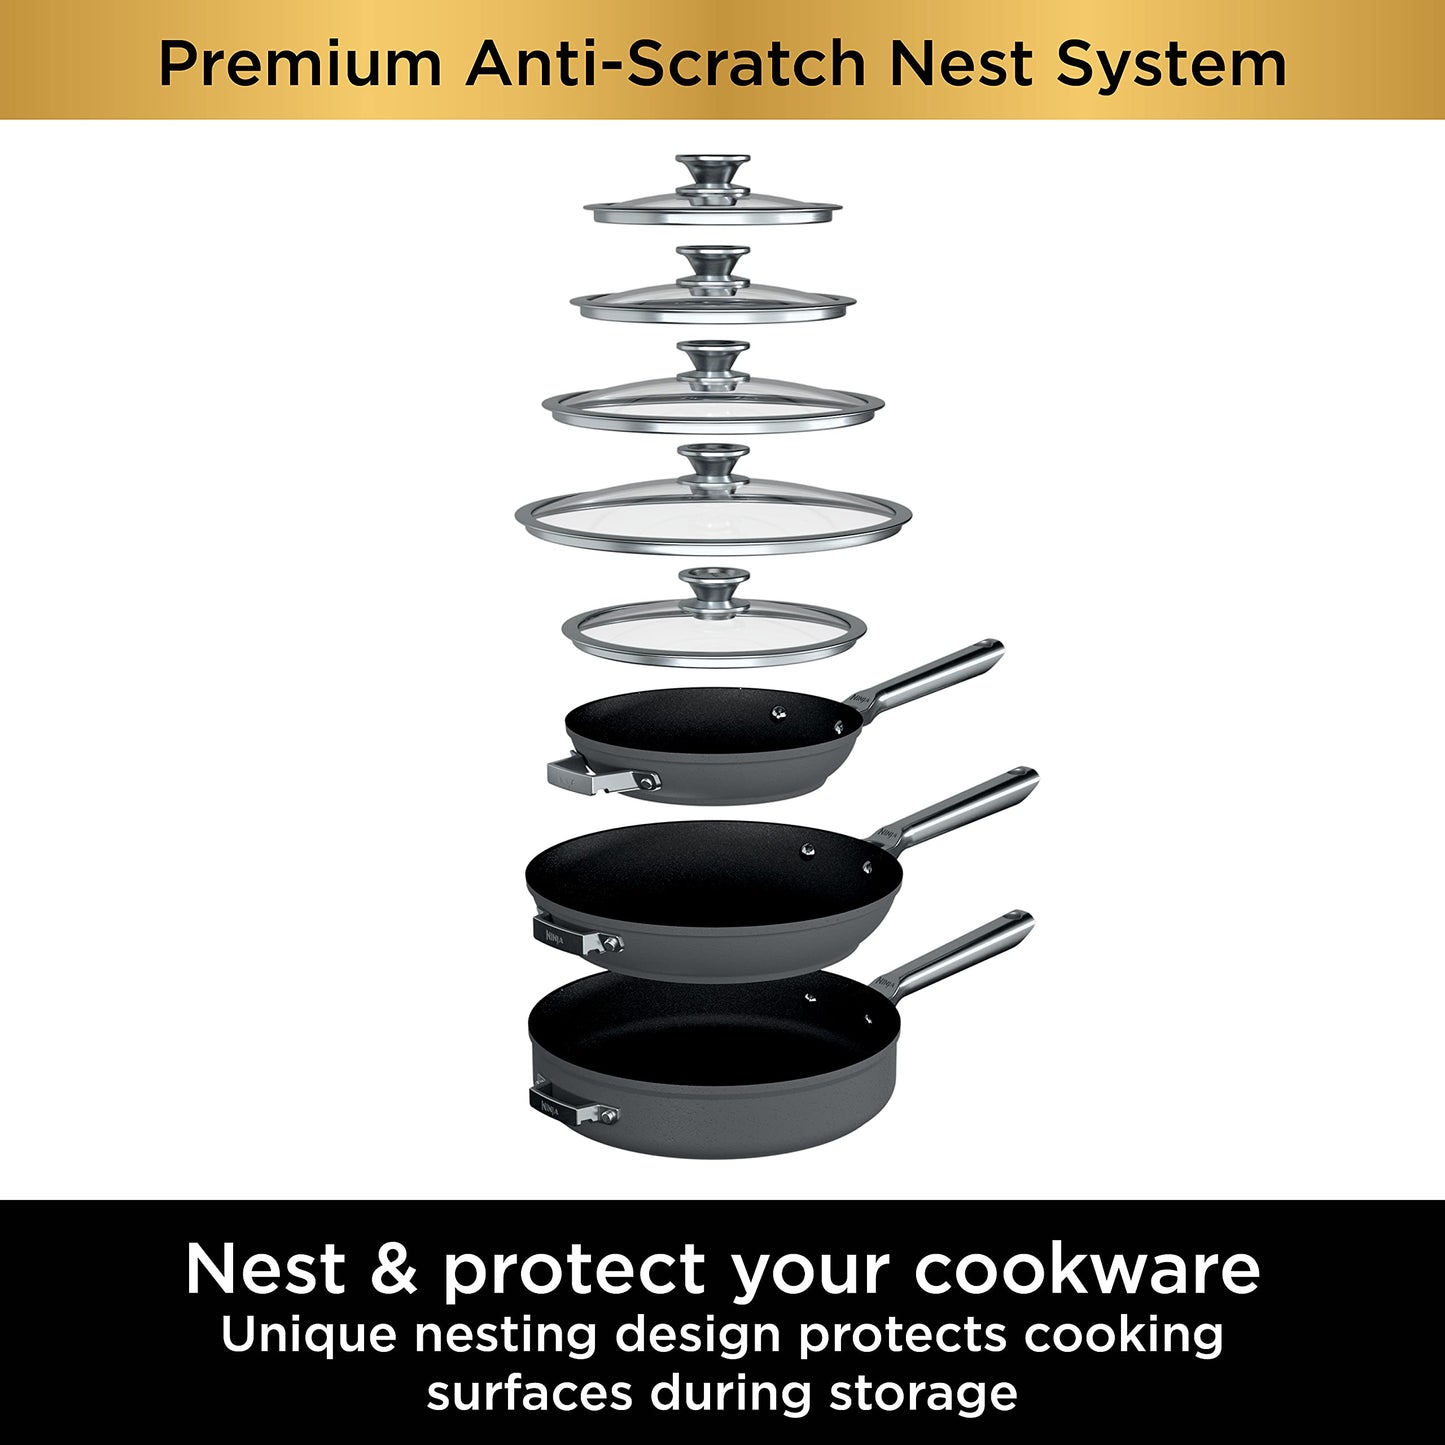 Ninja C52200 Foodi NeverStick Premium 2-Piece Fry Pan Set, Anti-Scratch Nesting Cookware, Hard-Anodized, Nonstick, Durable & Oven Safe to 500°F, Black